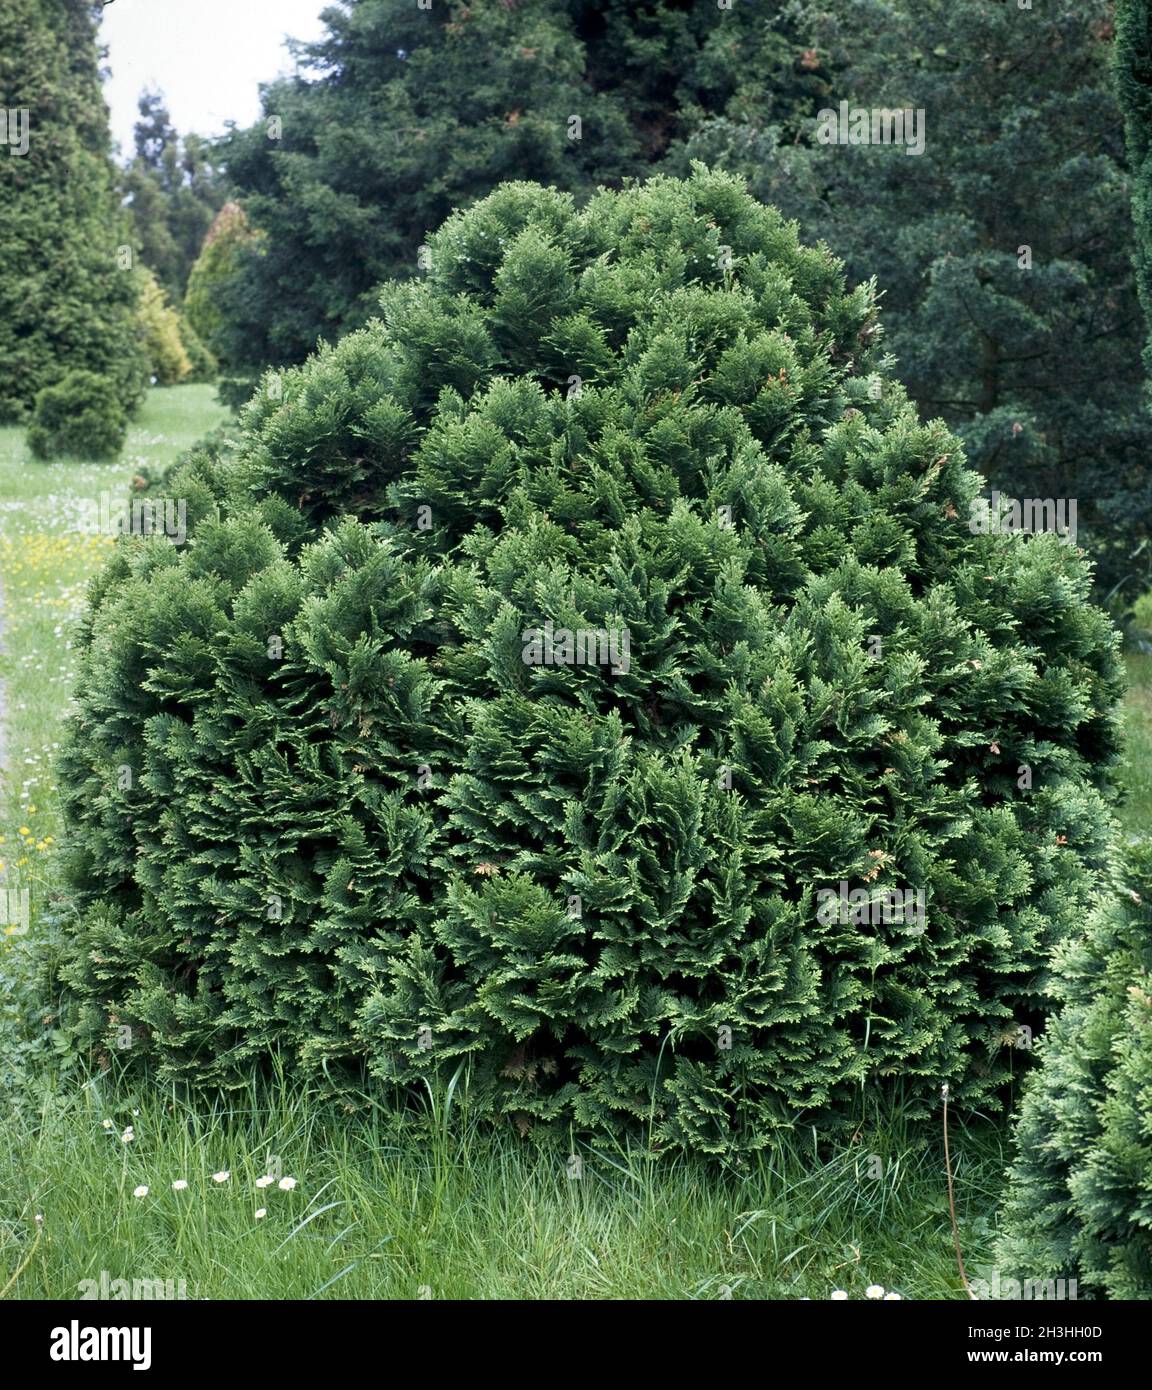 False cypress, Chamaecyparis, lawsoniana, Minima Glauca species Stock Photo